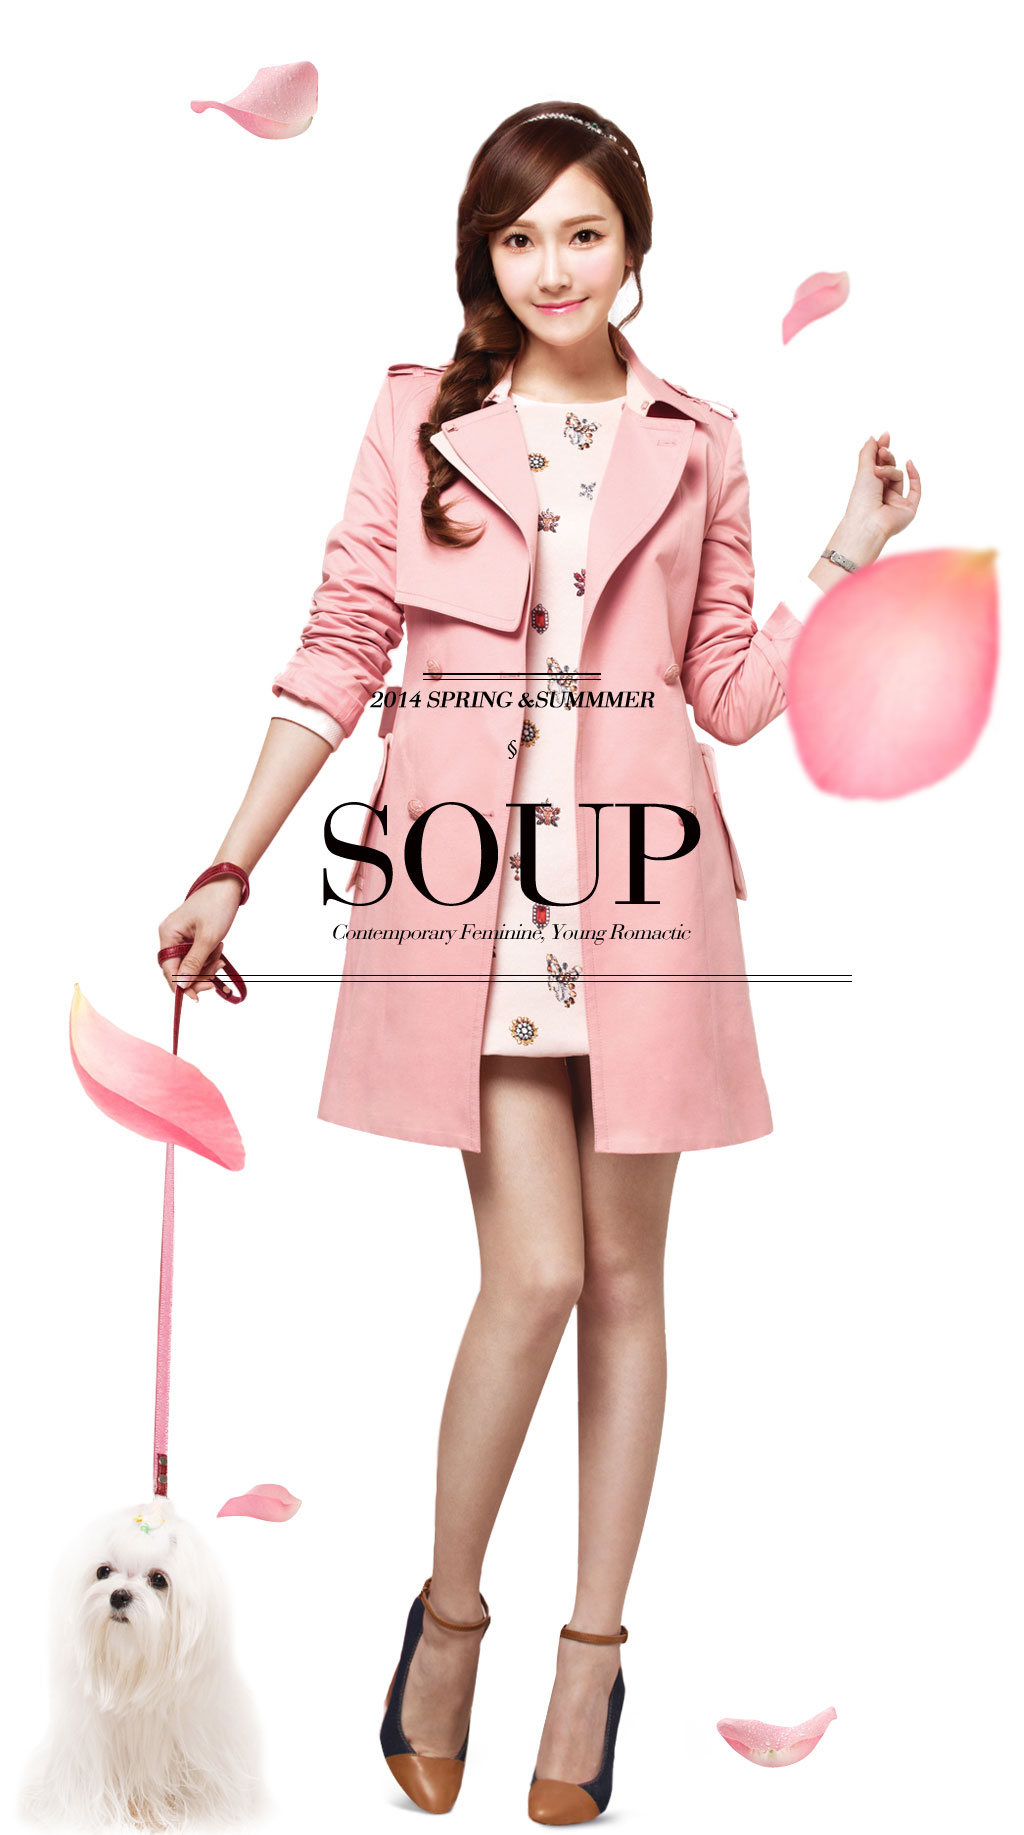 Jessica SOUP 2014 S/S website image